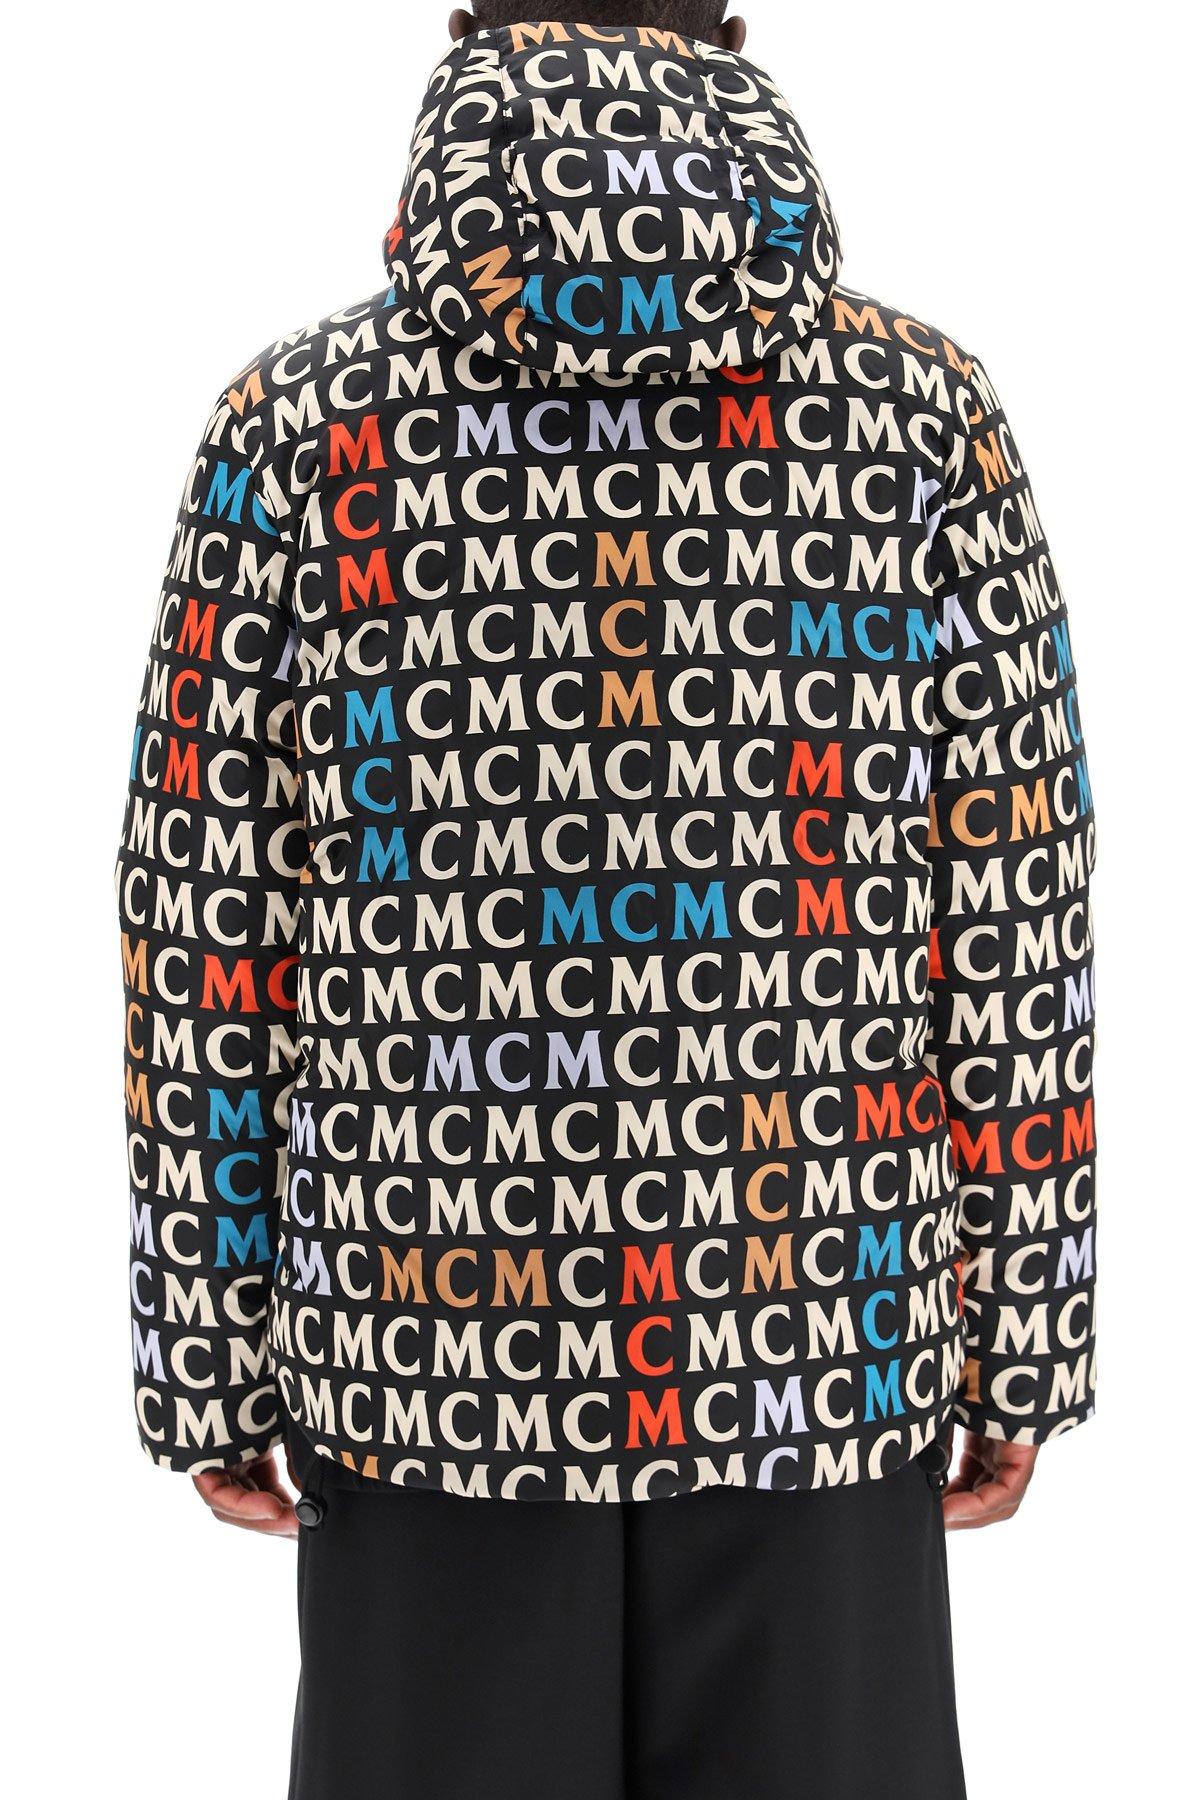 MCM Monogram Print Puffer Jacket in Regenerated Nylon